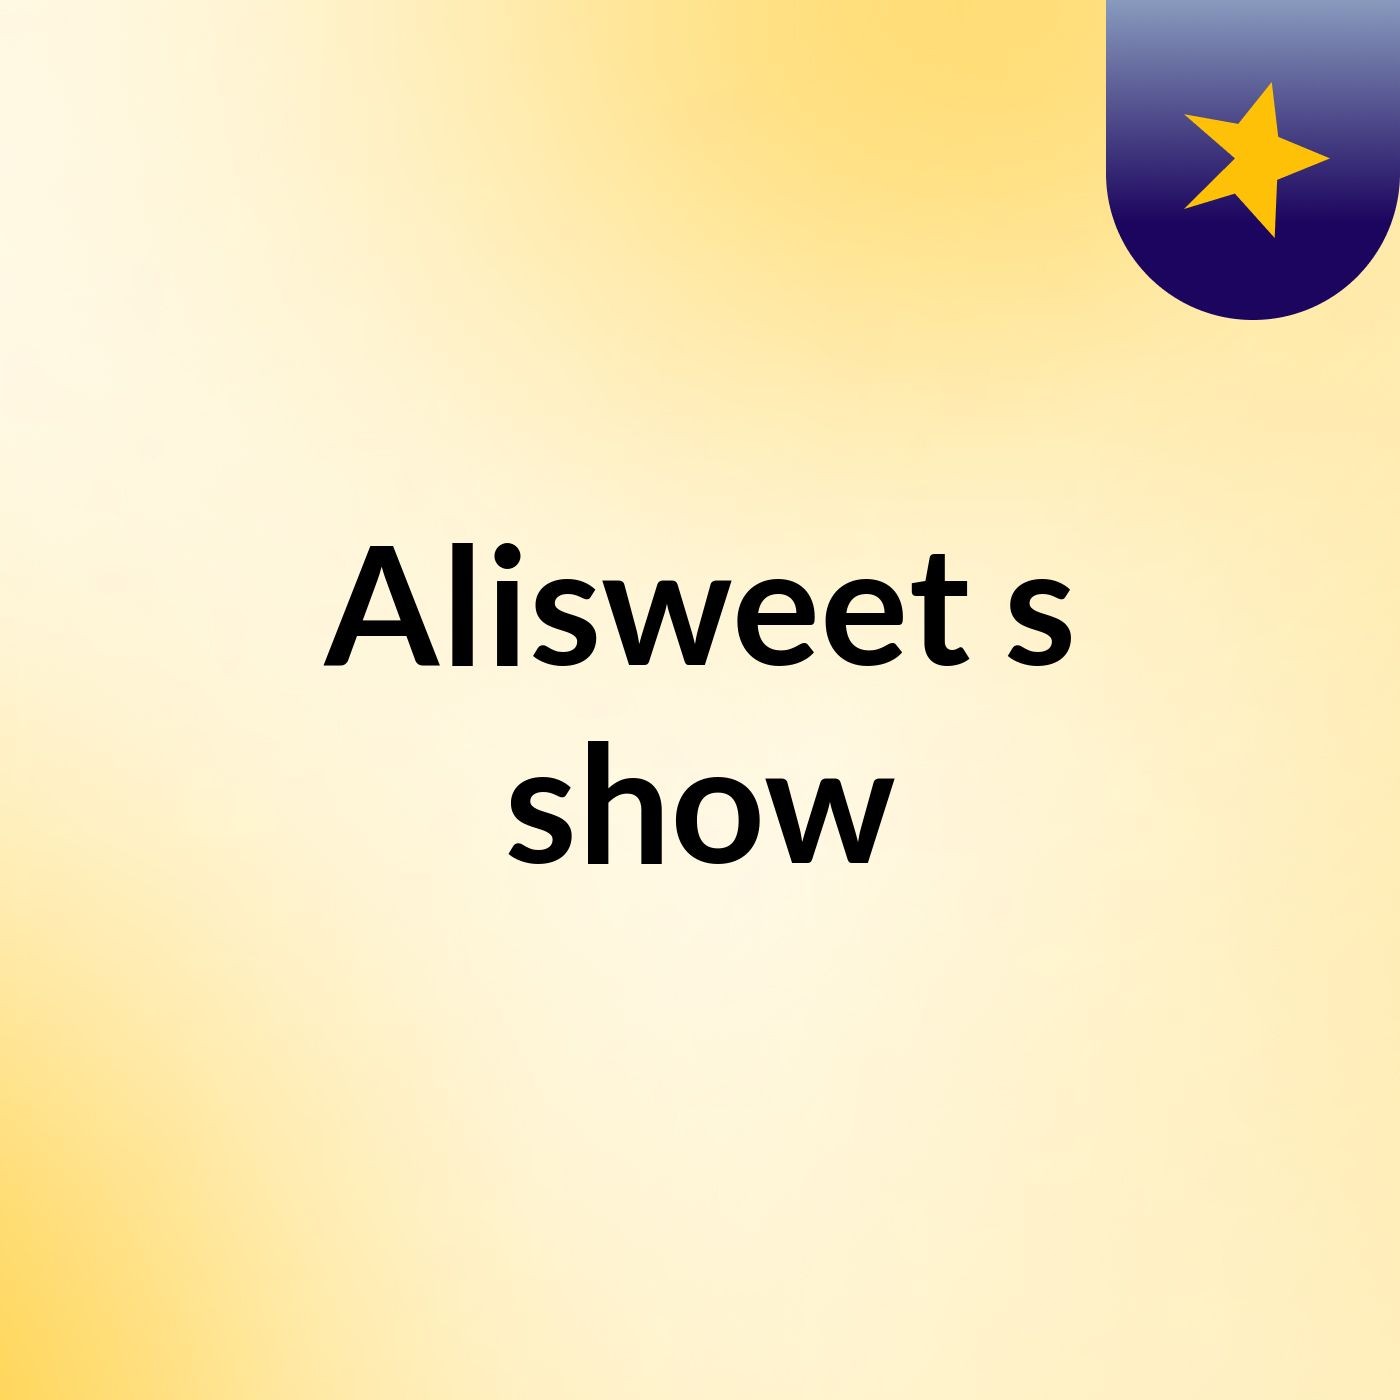 Alisweet's show